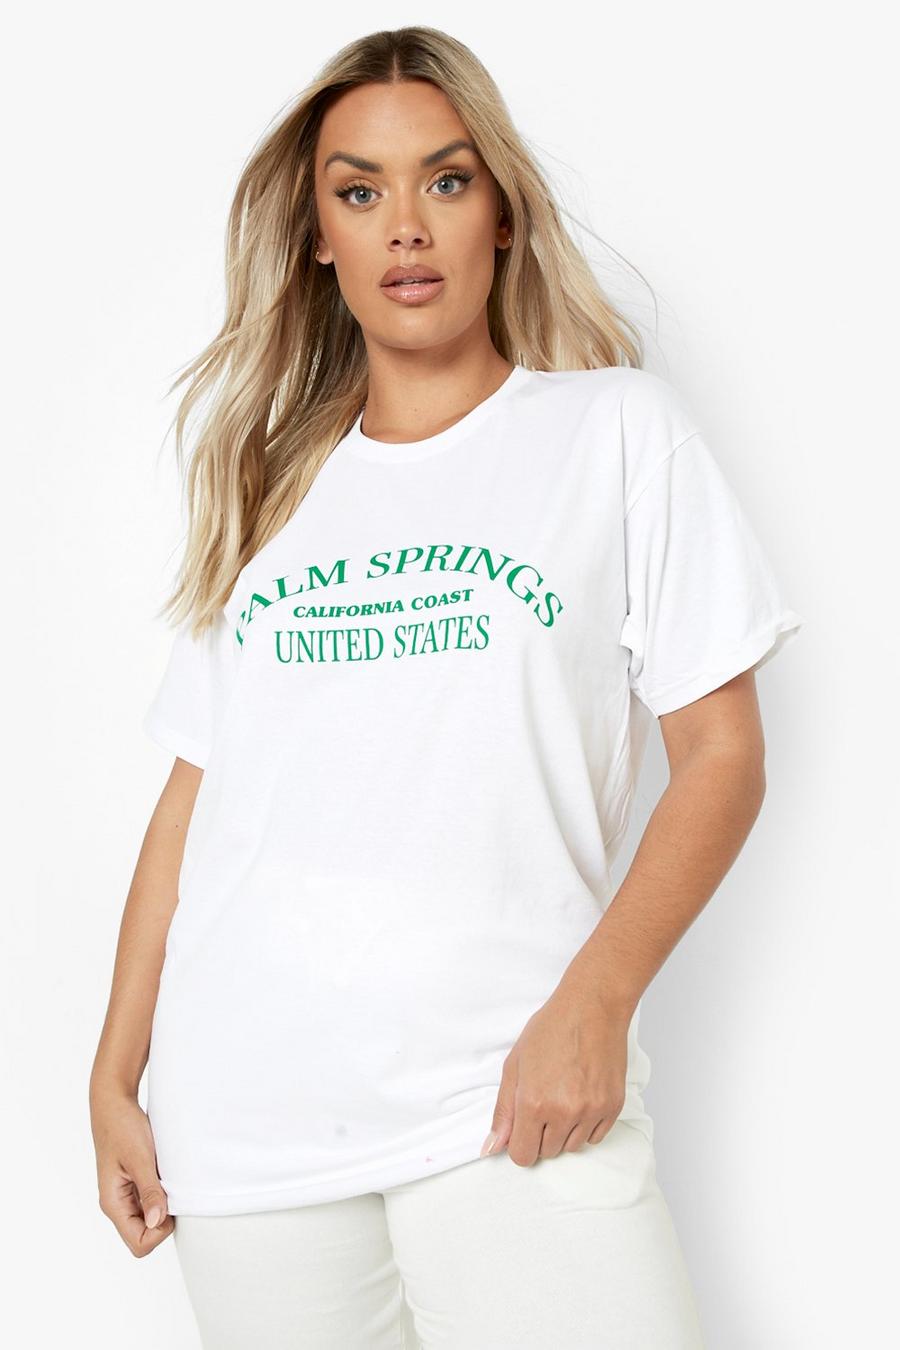 Boohoo UK - shirt Dress - Women's Plus Brooklyn Slogan Oversized T